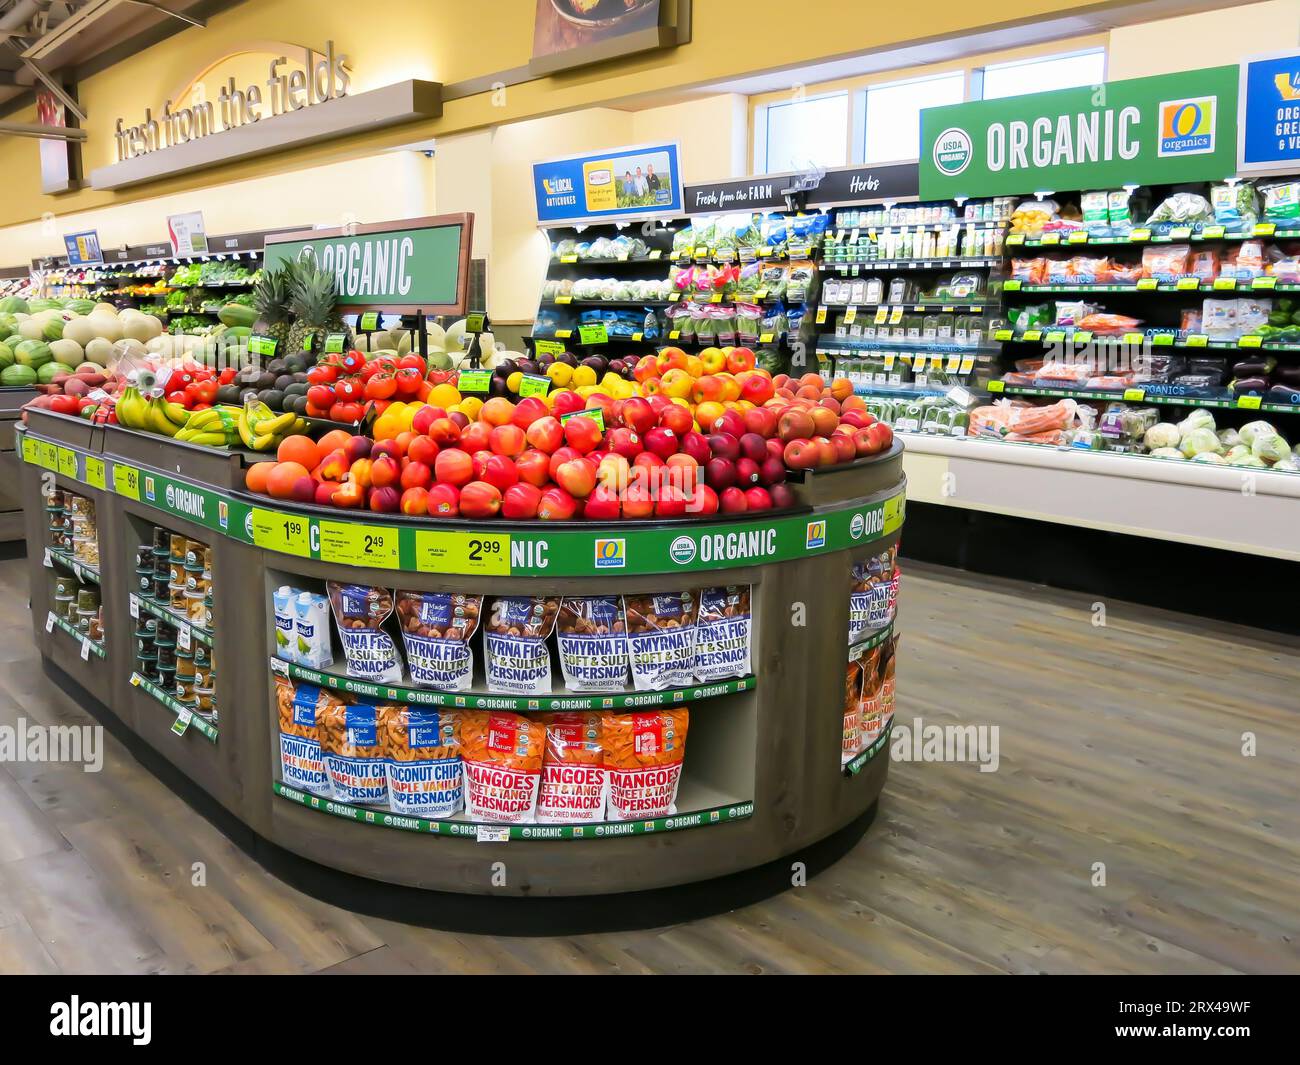 Organic Produce Aisle in American Supermarket Stock Photo